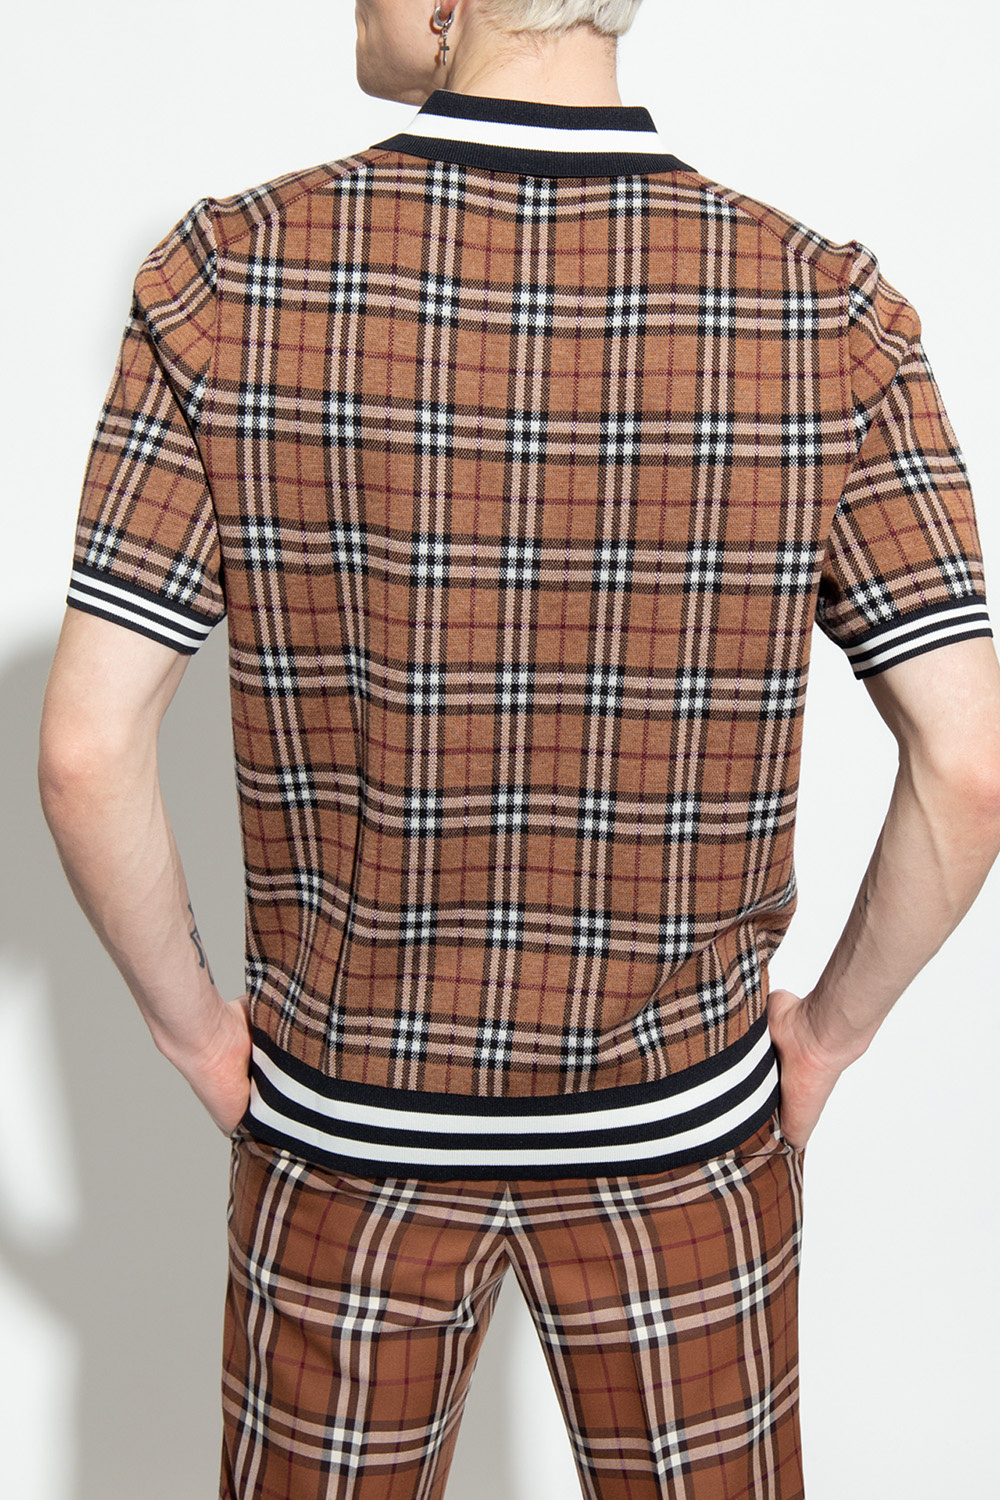 Burberry ‘Makeham’ wool Camisa polo shirt